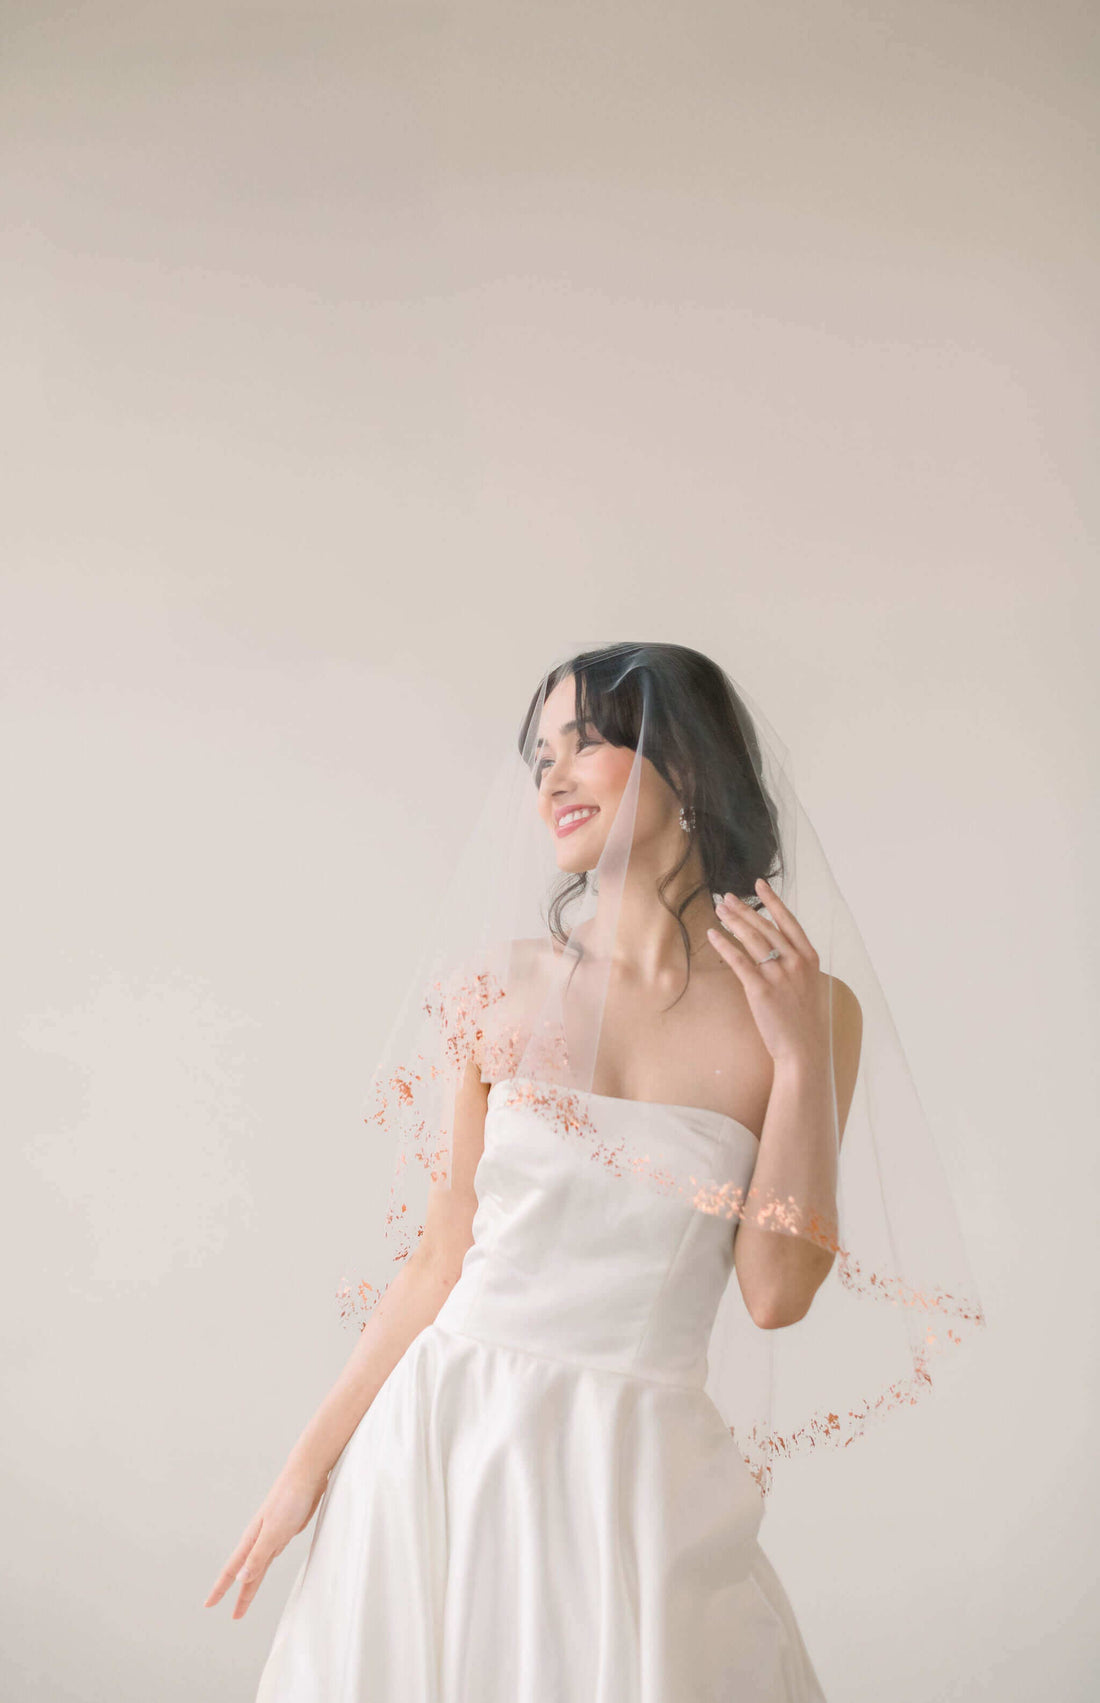 When should I buy my wedding dress accessories? Tessa Kim